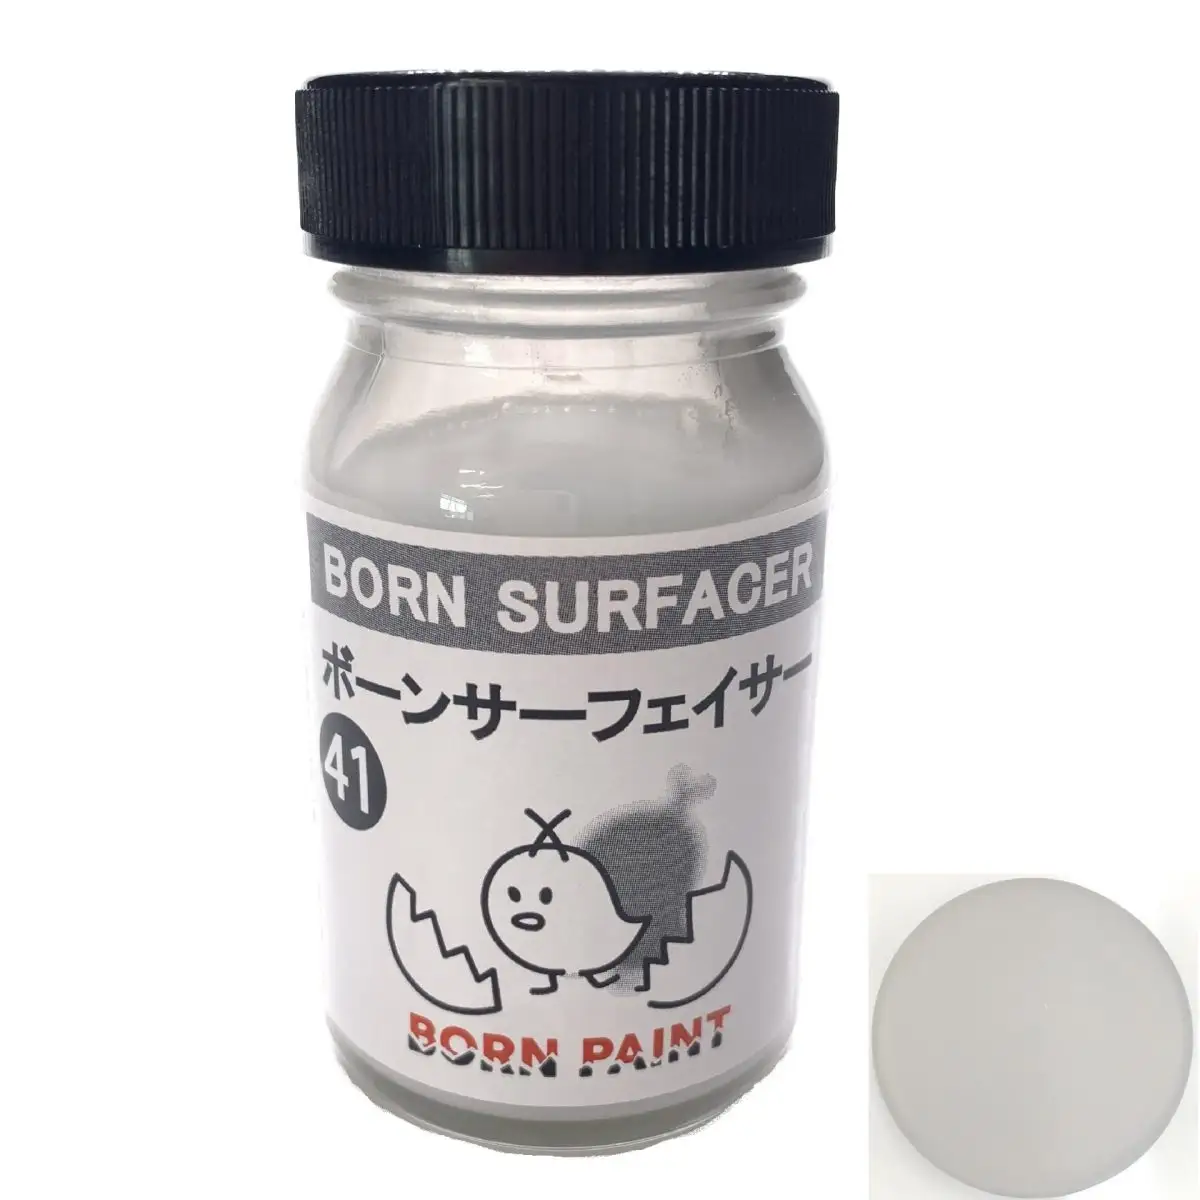 Japan Industrial Paint Supplies Metal Surface Treatment Chemicals